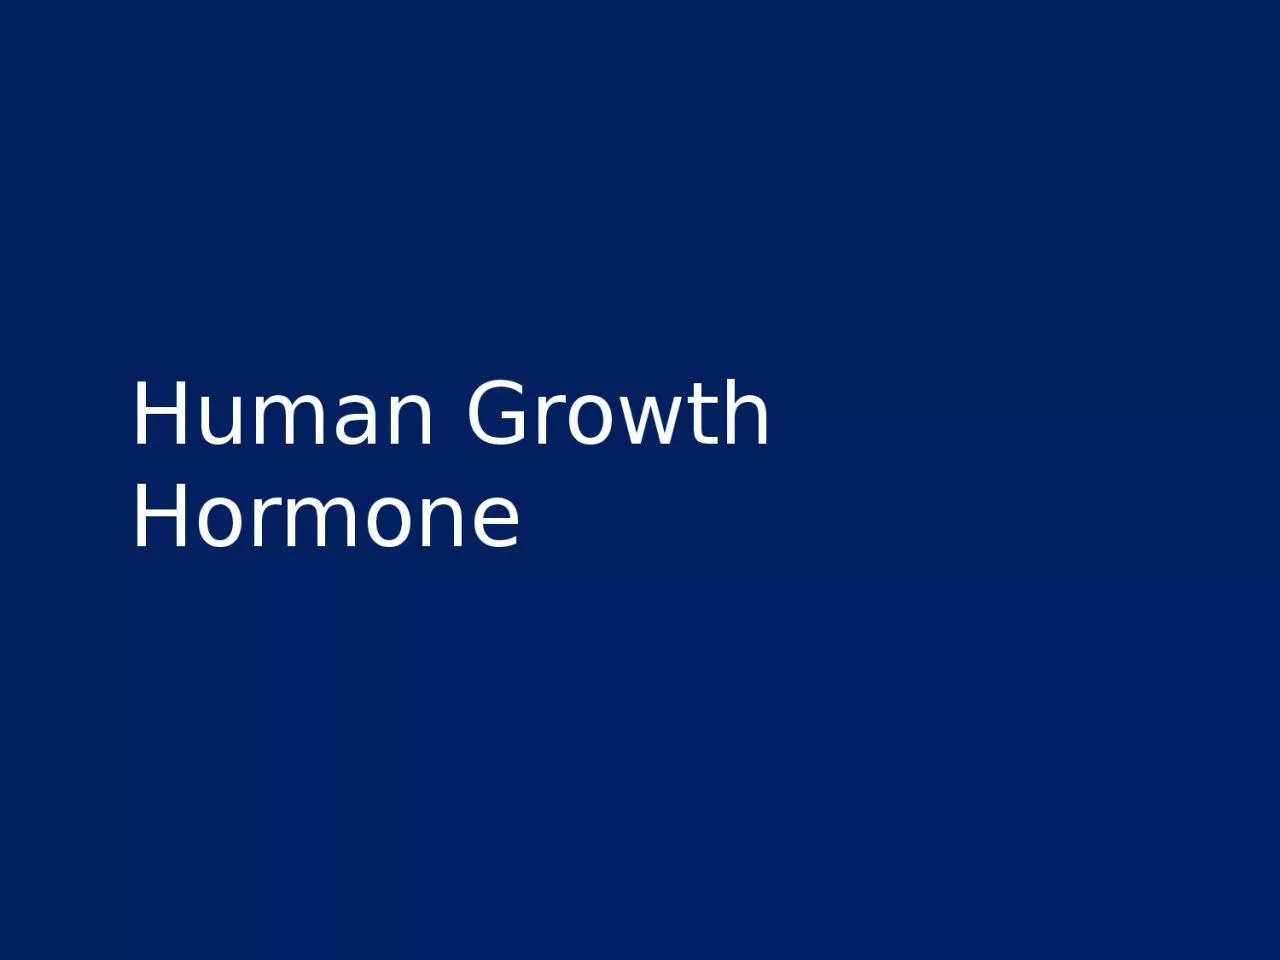 Human Growth Hormone  Growth hormone (